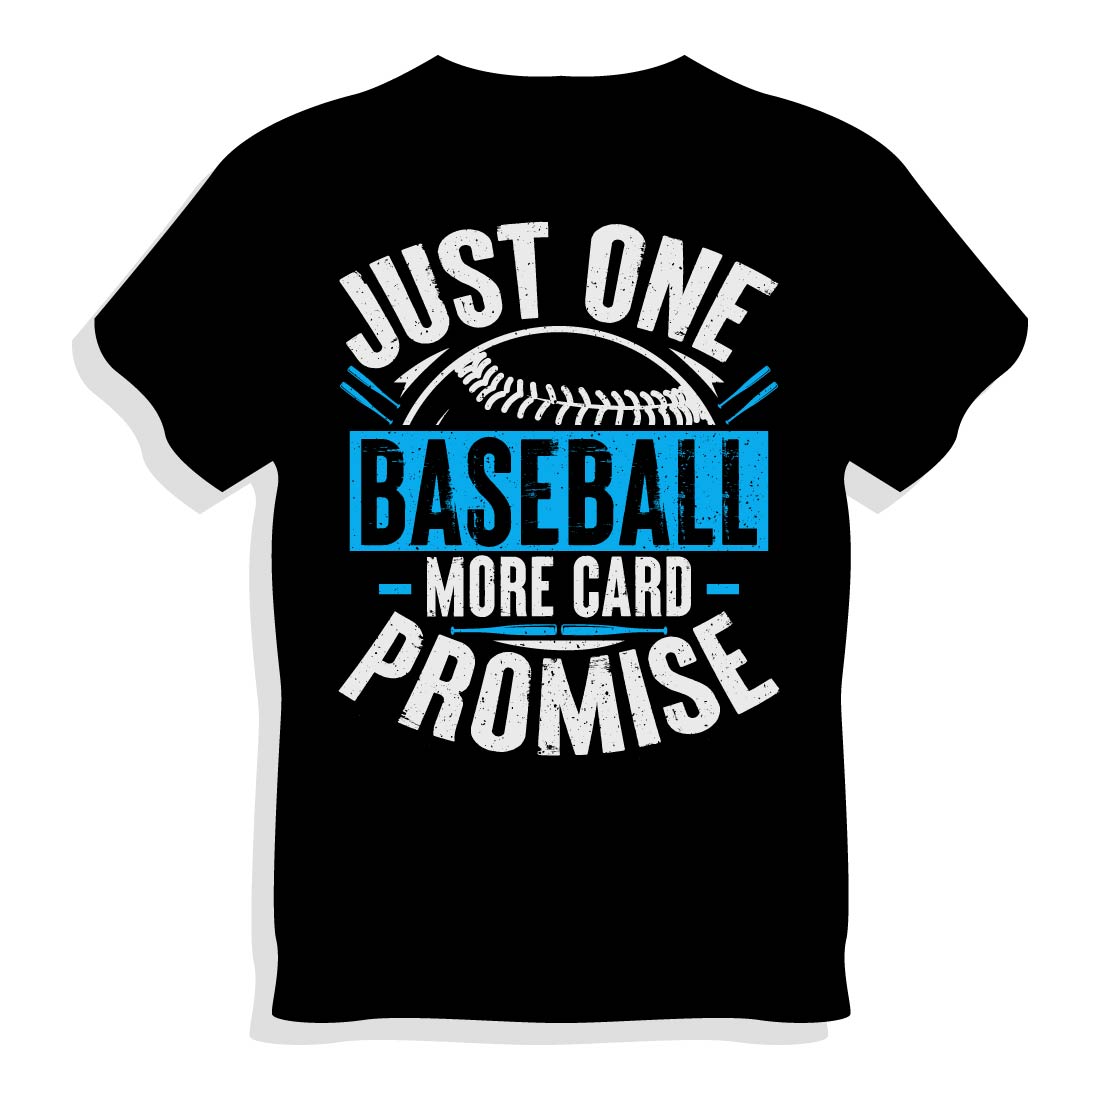 Baseball T-shirt Design - MasterBundles